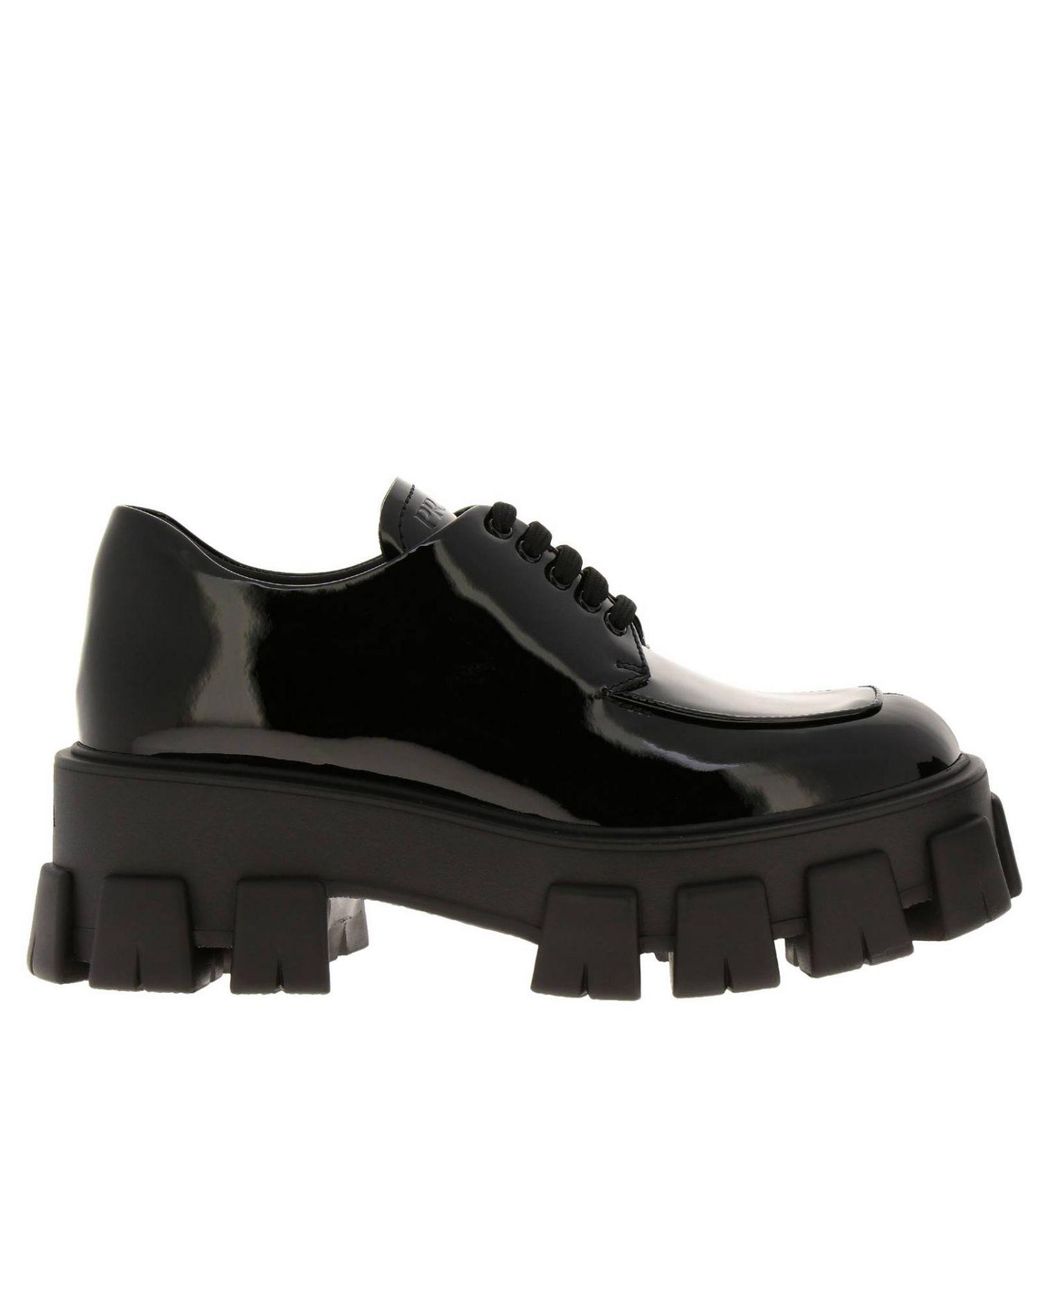 Prada Women's Oxford Shoes in Black | Lyst UK